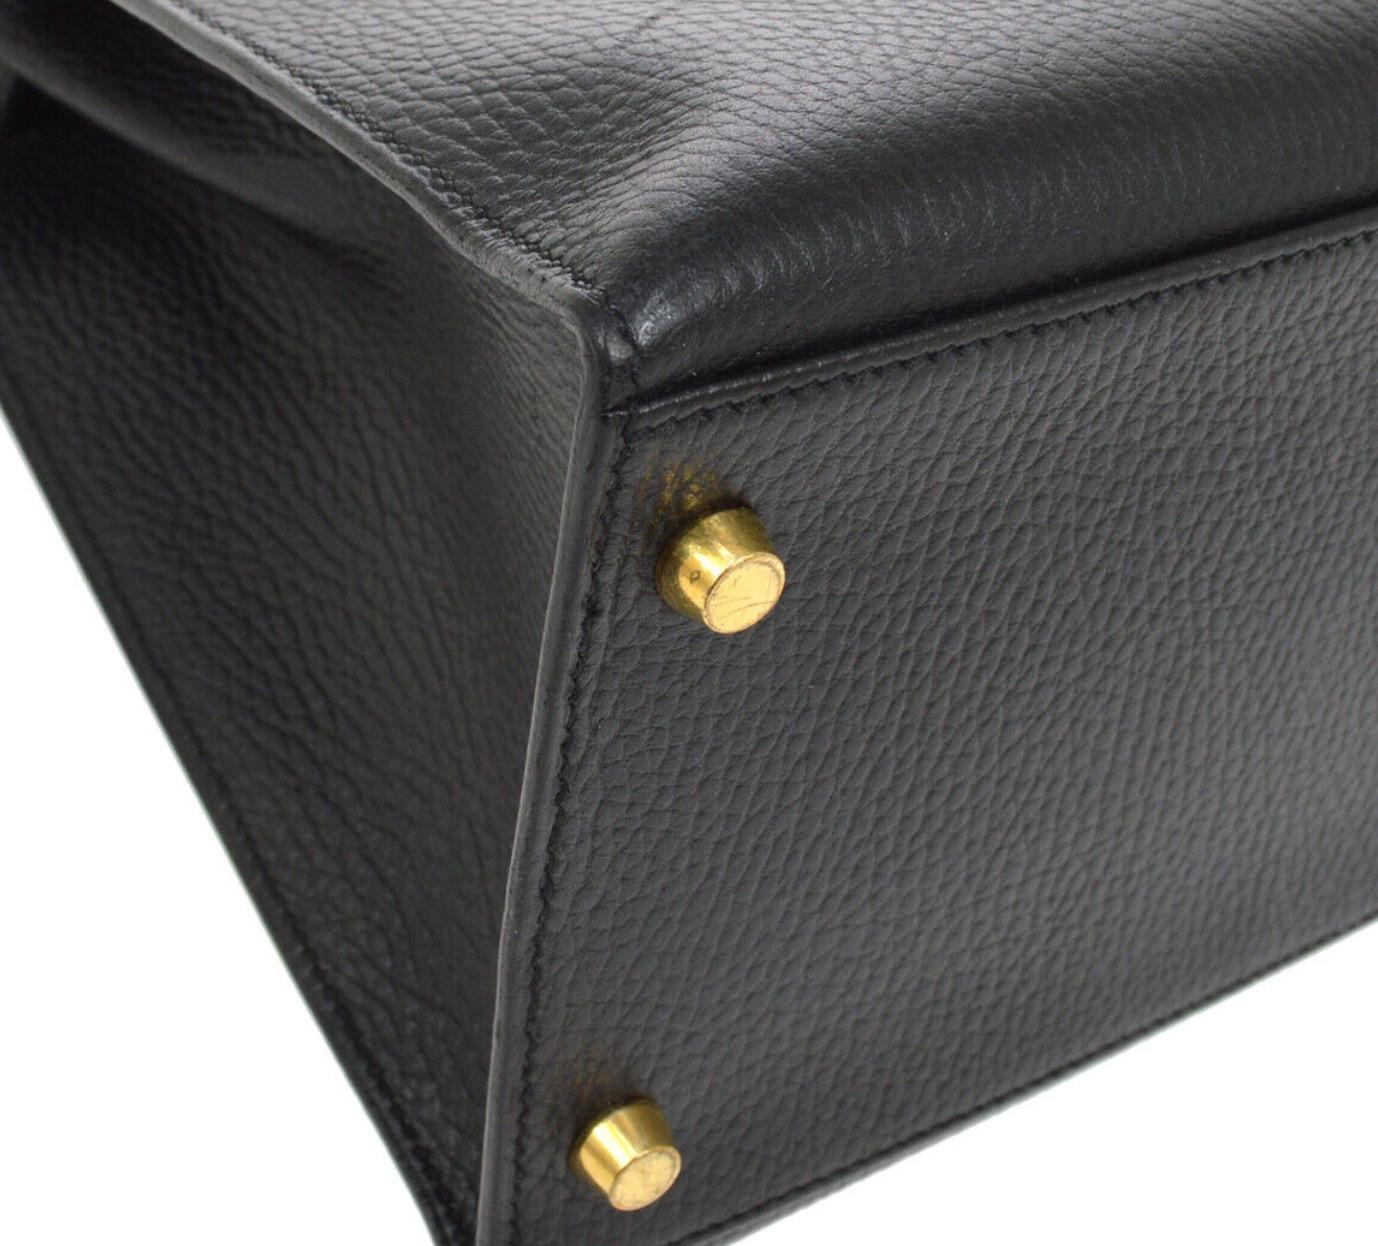 Women's Hermes Kelly 35 Black Leather Gold Carryall Top Handle Satchel Tote Bag 